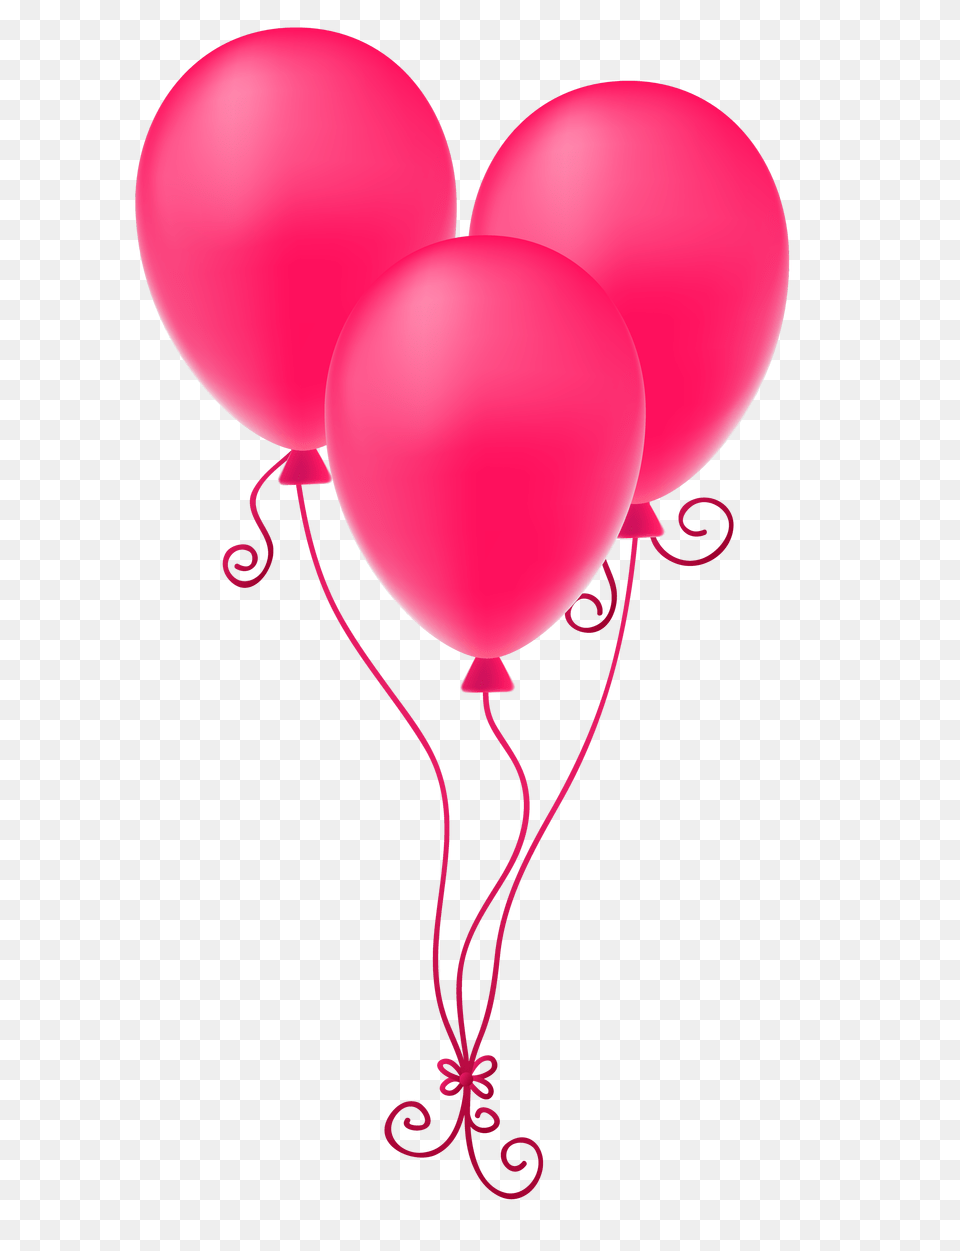 Pngpix Com Pink Balloons Image, Balloon Free Png Download